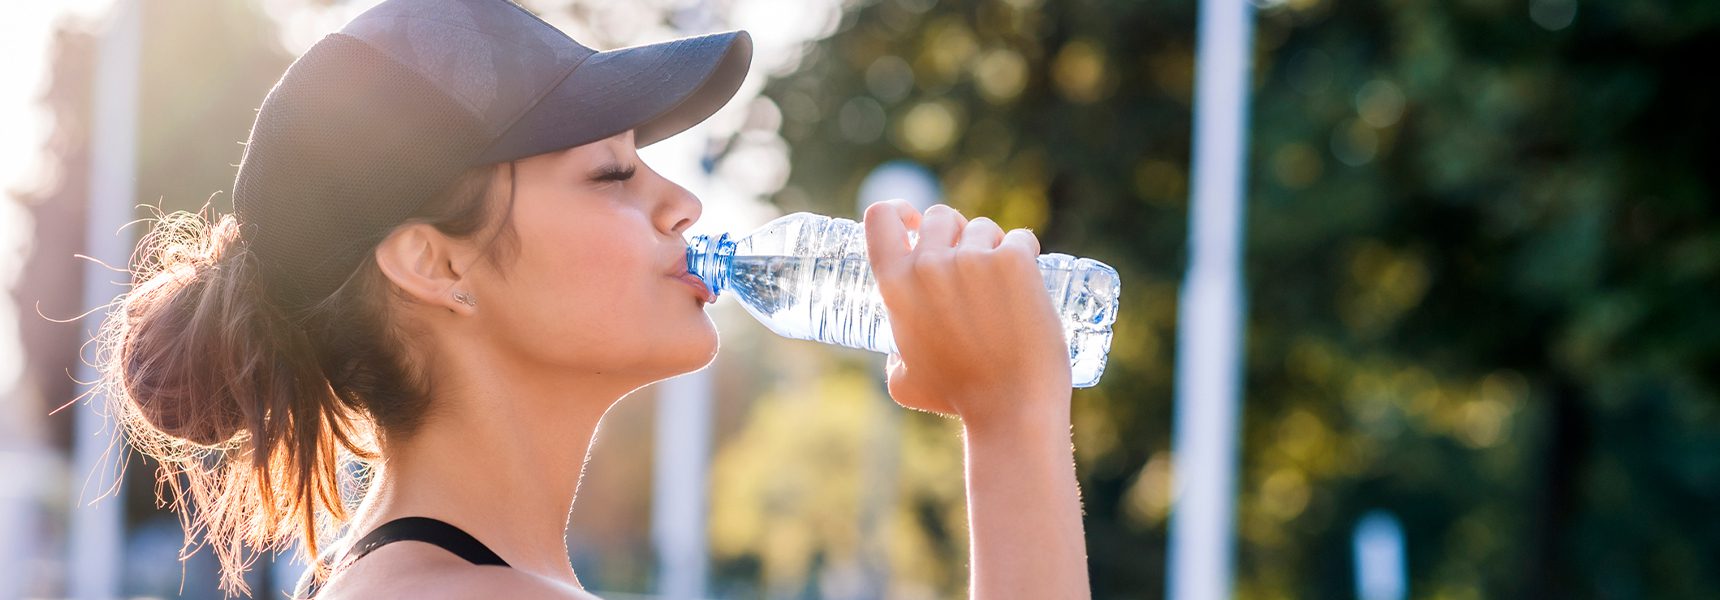 sporty woman drinking water